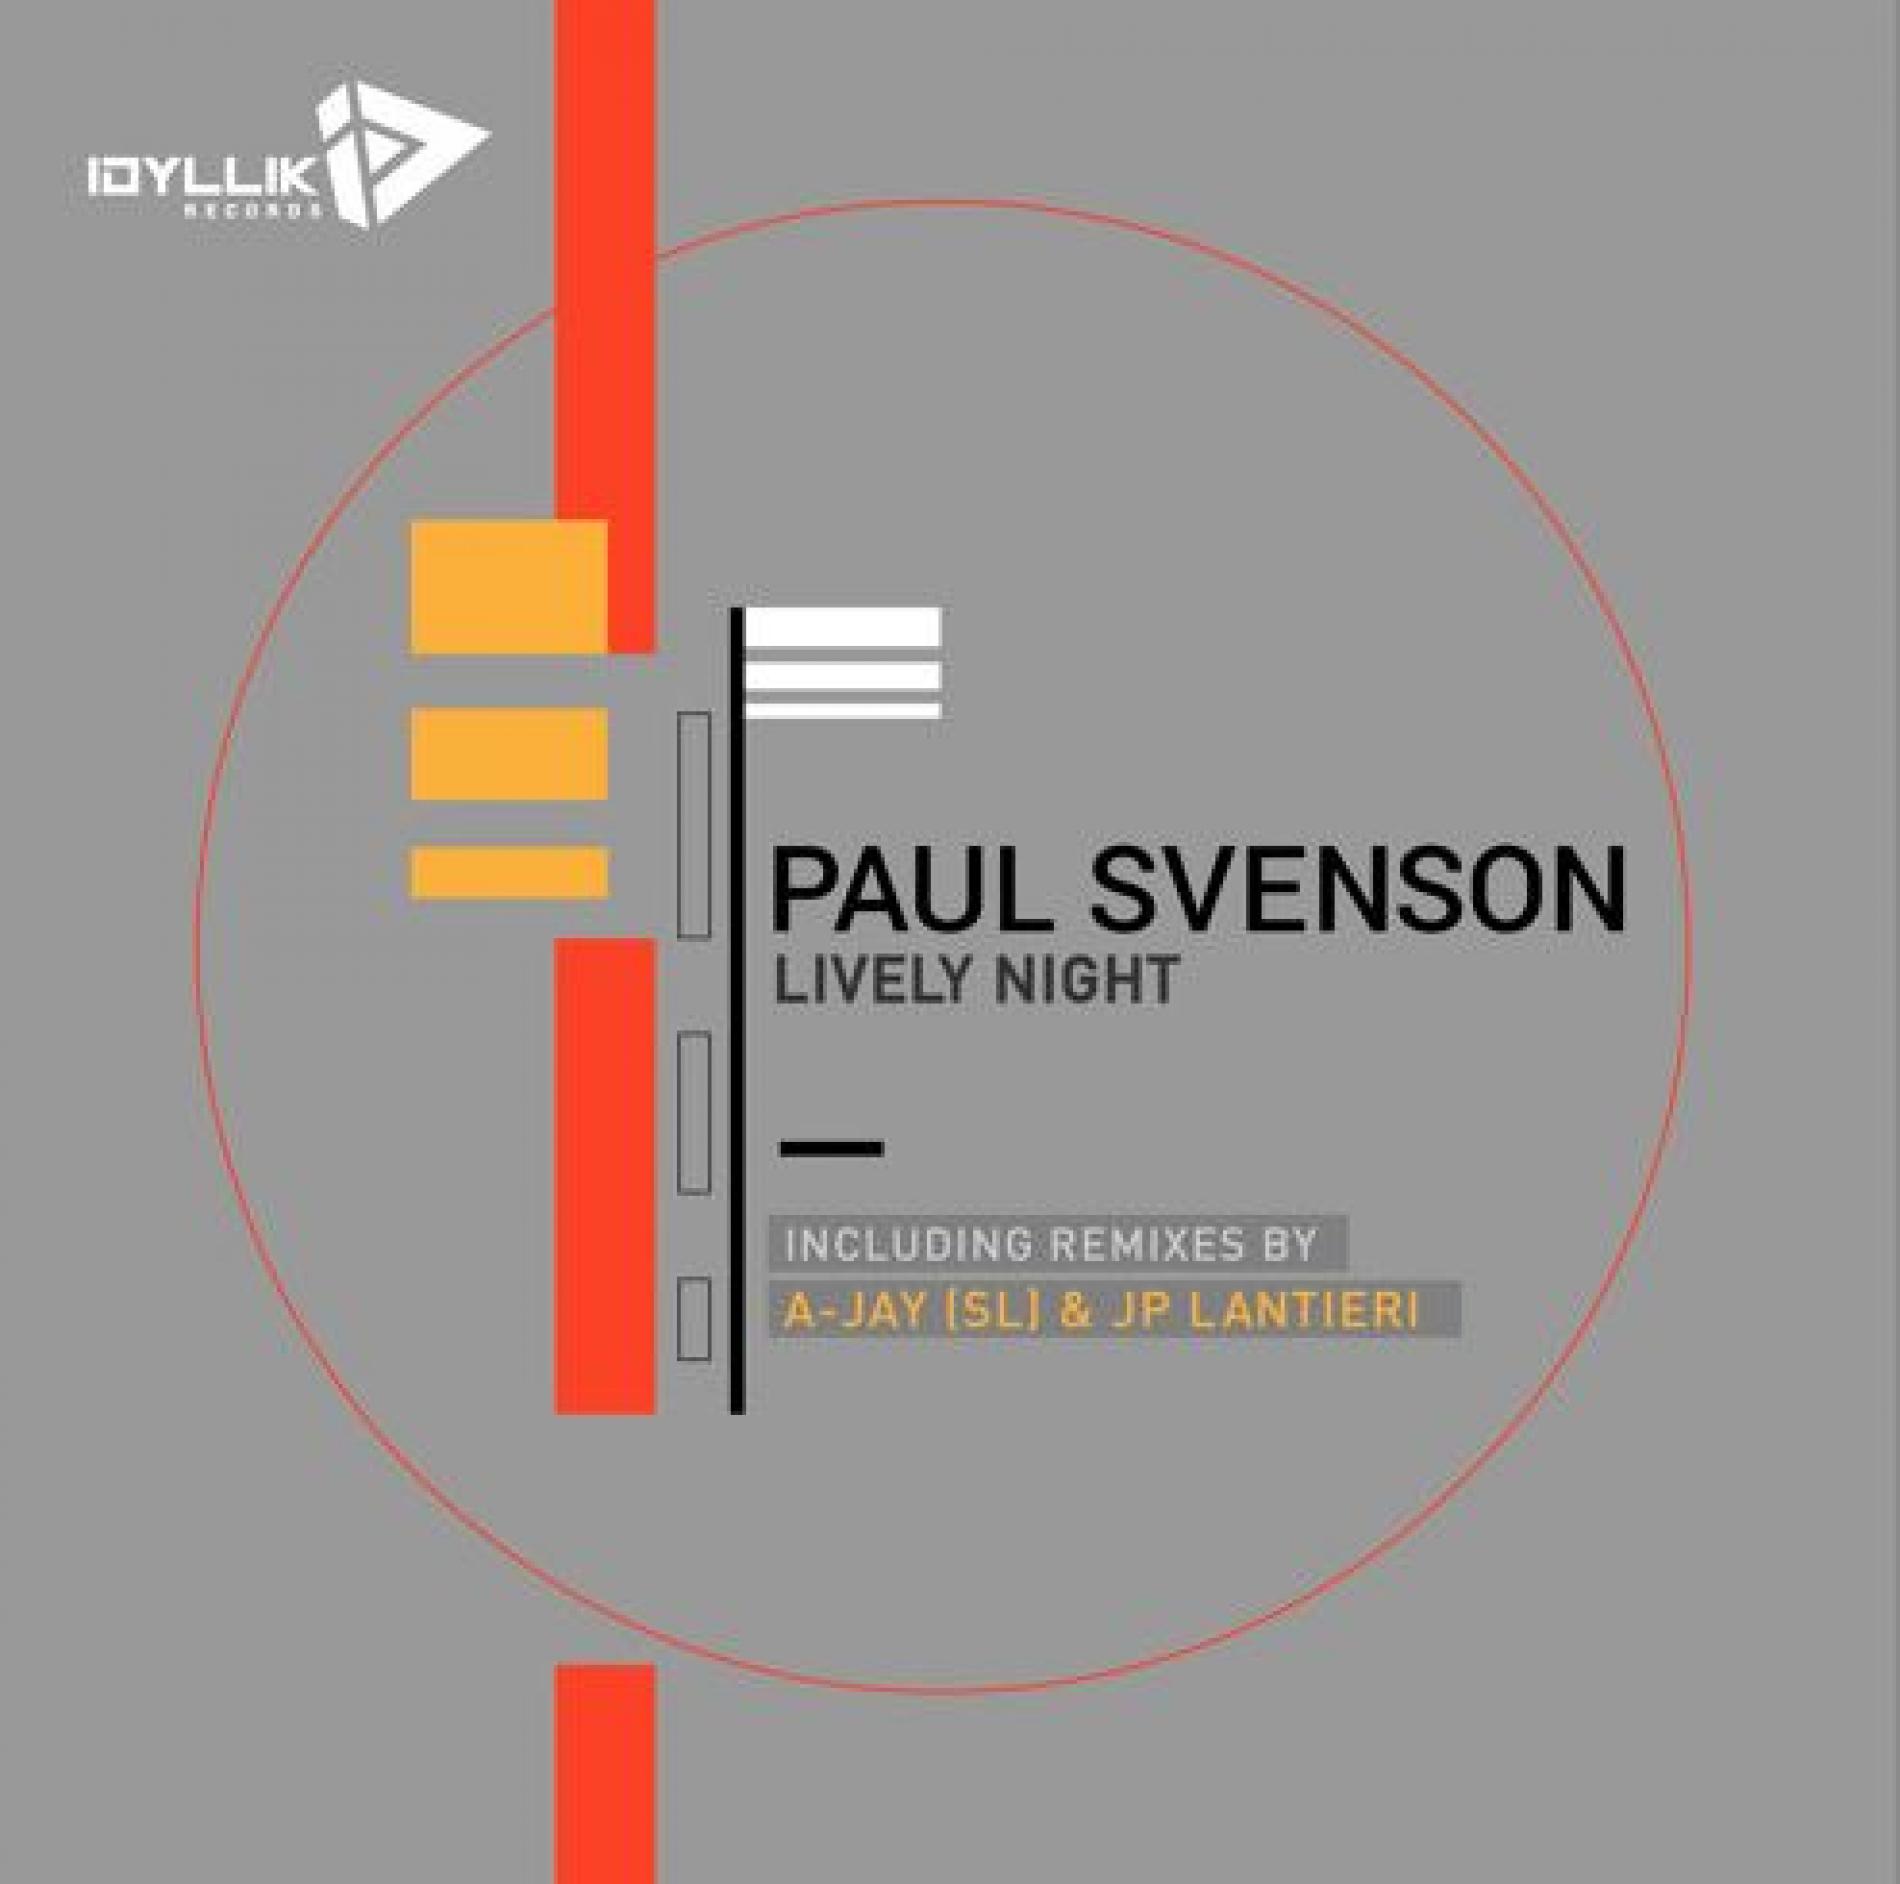 New Music : Paul Svenson – Lively Night (A-Jay (SL) Remix) [Idyllik Records]